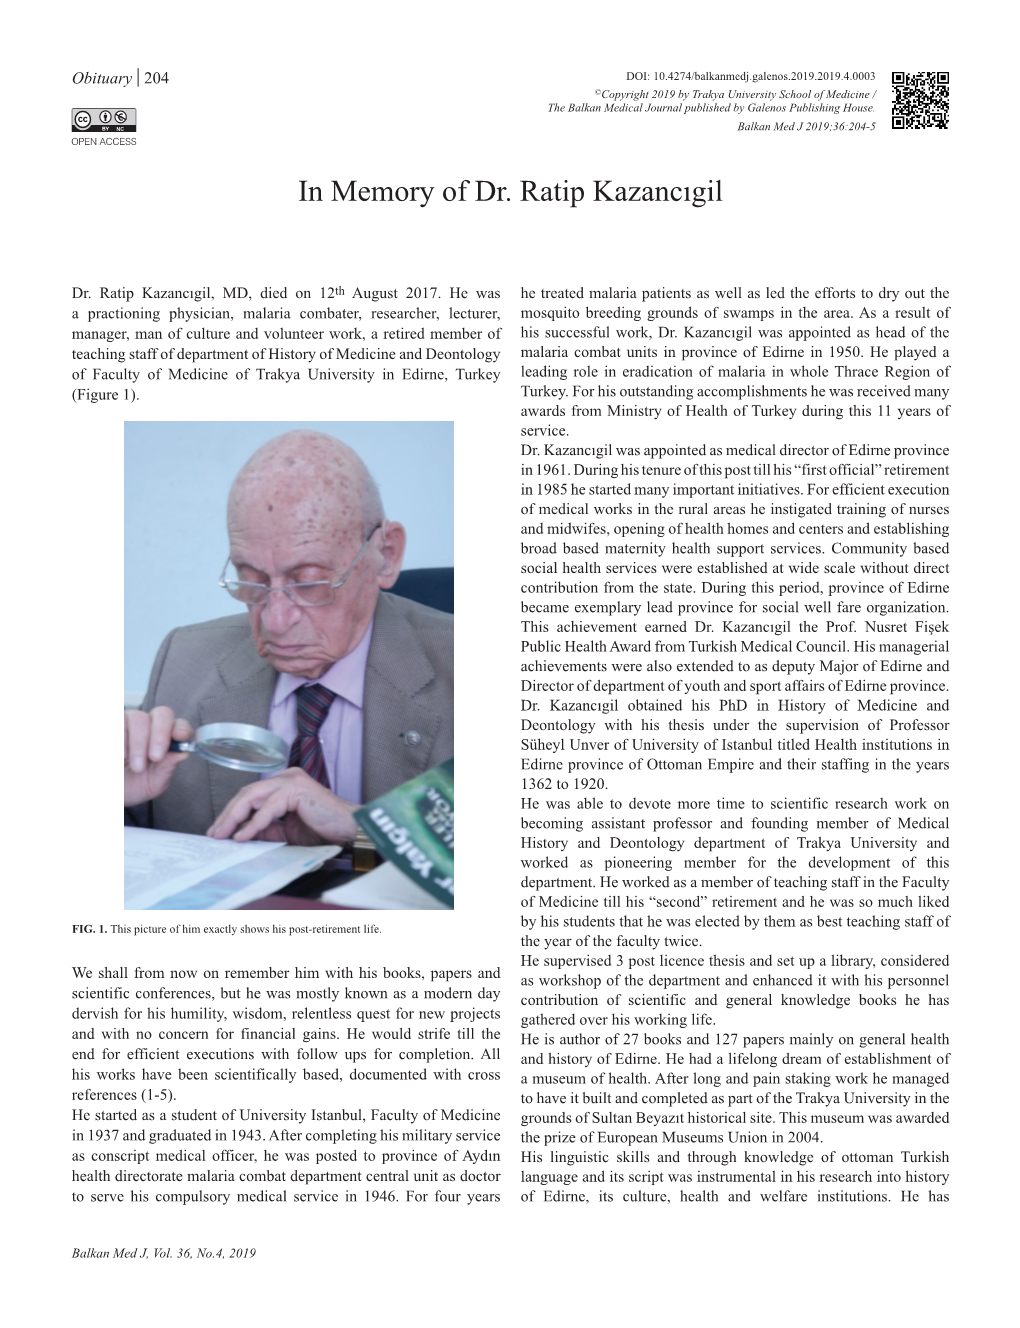 In Memory of Dr. Ratip Kazancıgil